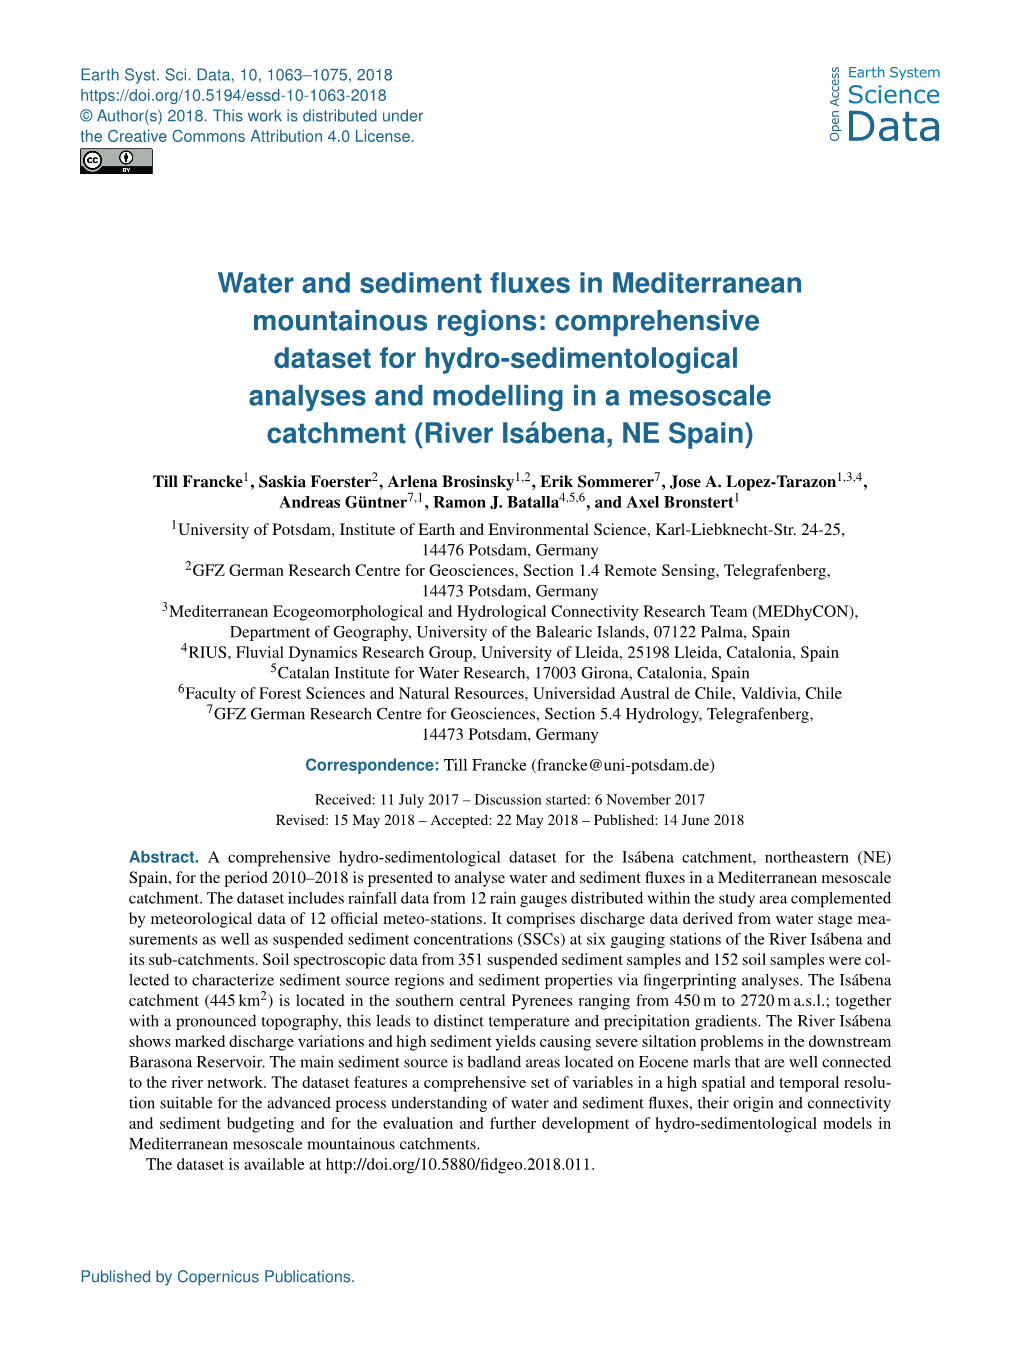 Water and Sediment Fluxes in Mediterranean Mountainous Regions